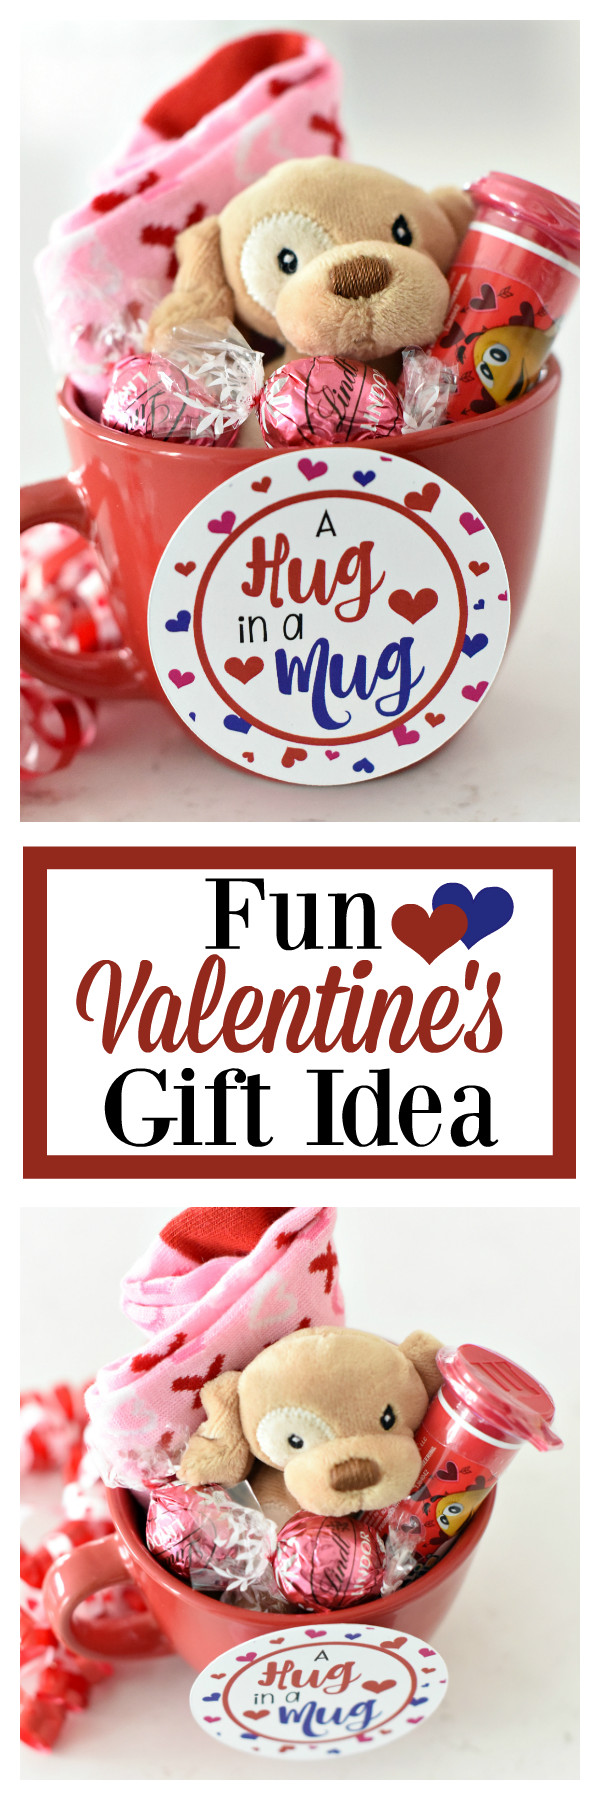 Valentines Gift Ideas Pinterest
 Fun Valentines Gift Idea for Kids – Fun Squared